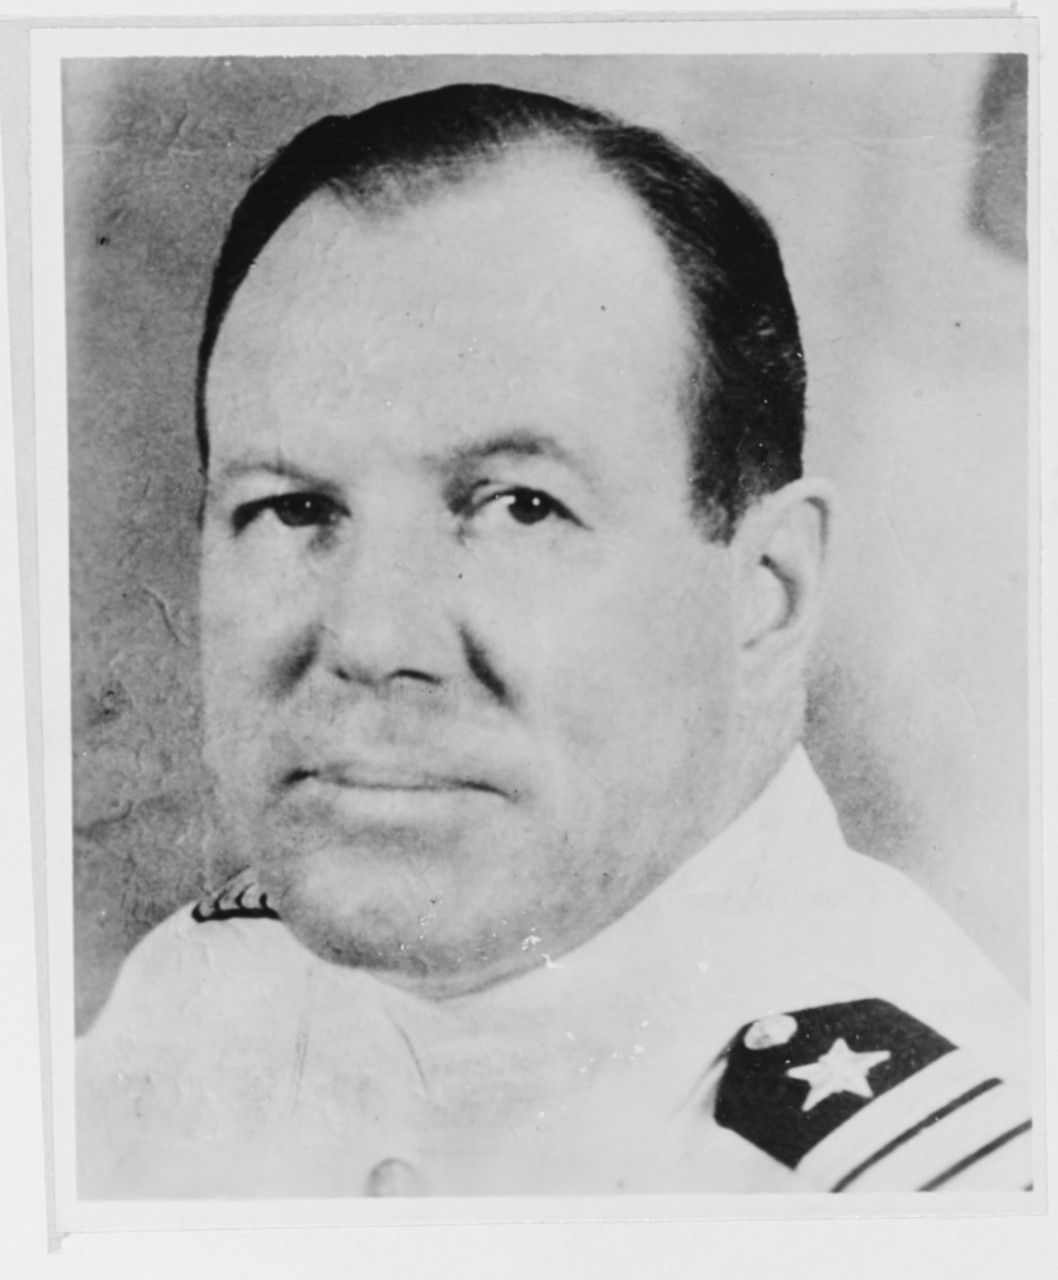 Captain Arthur Leroy Bristol Jr., USN